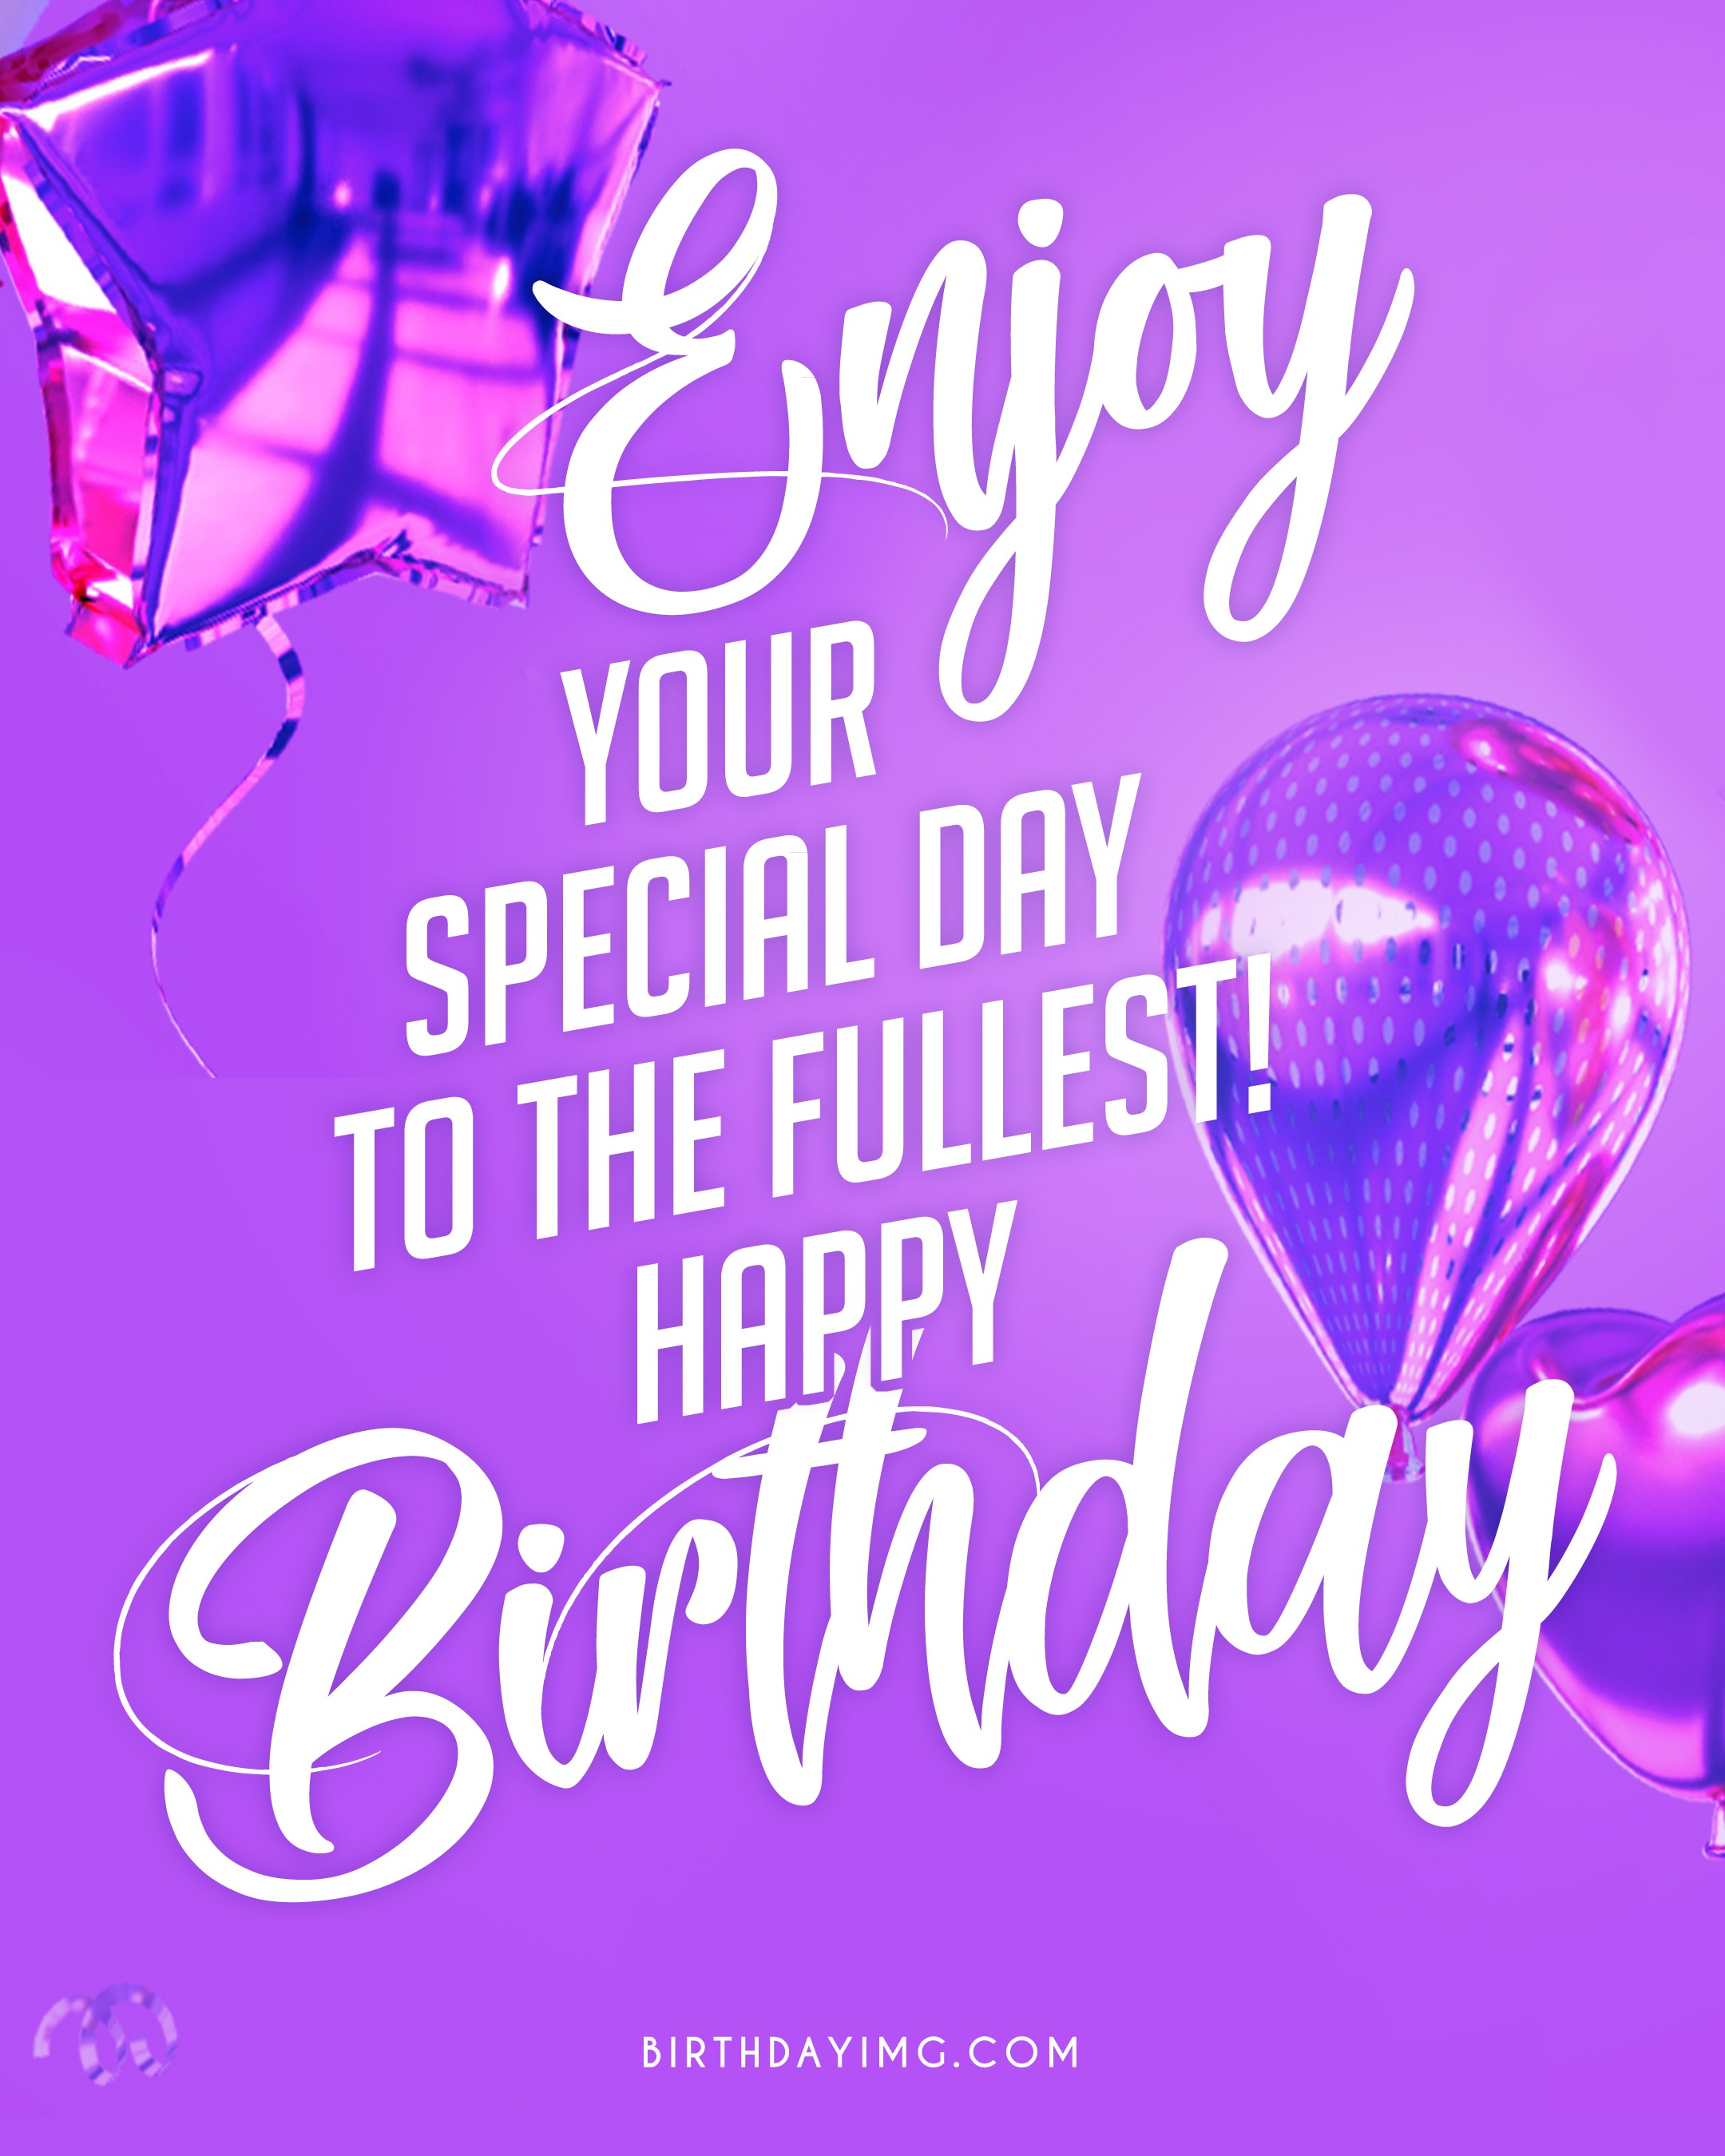 Enjoy Your Birthday Cake GIF | GIFDB.com